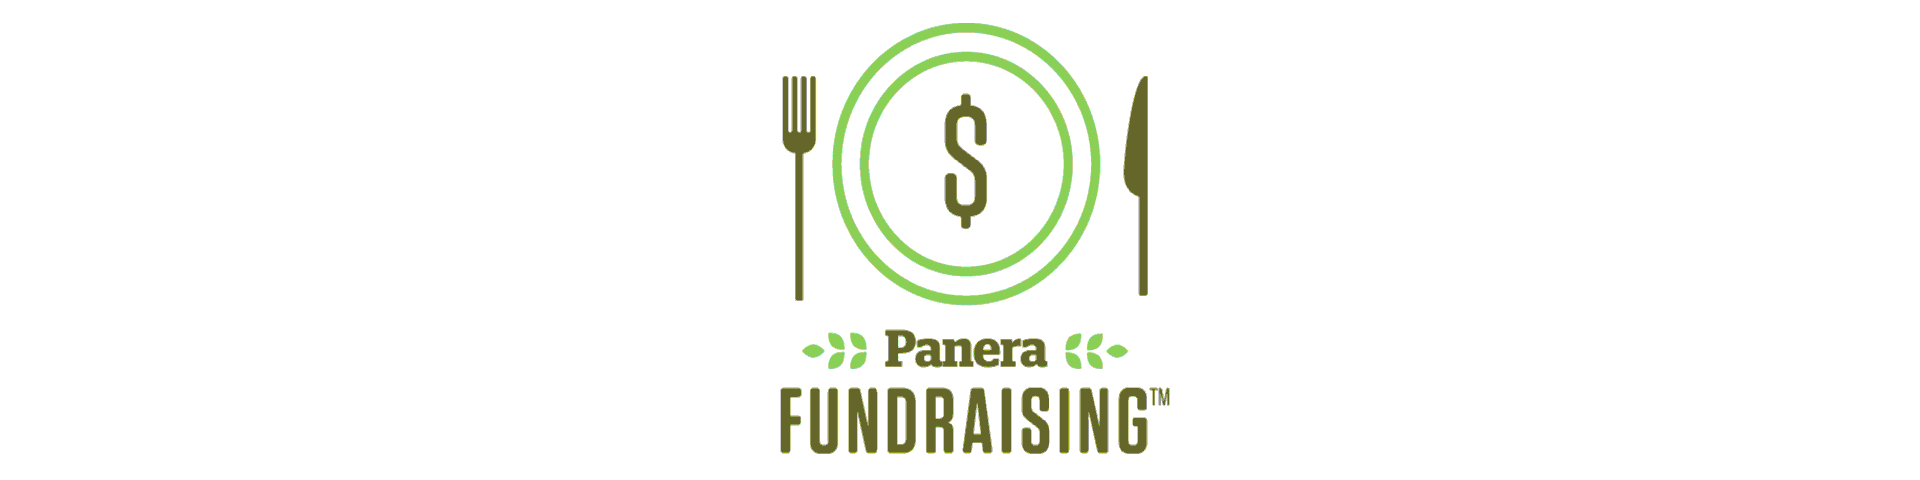 Panera Fundraising Logo